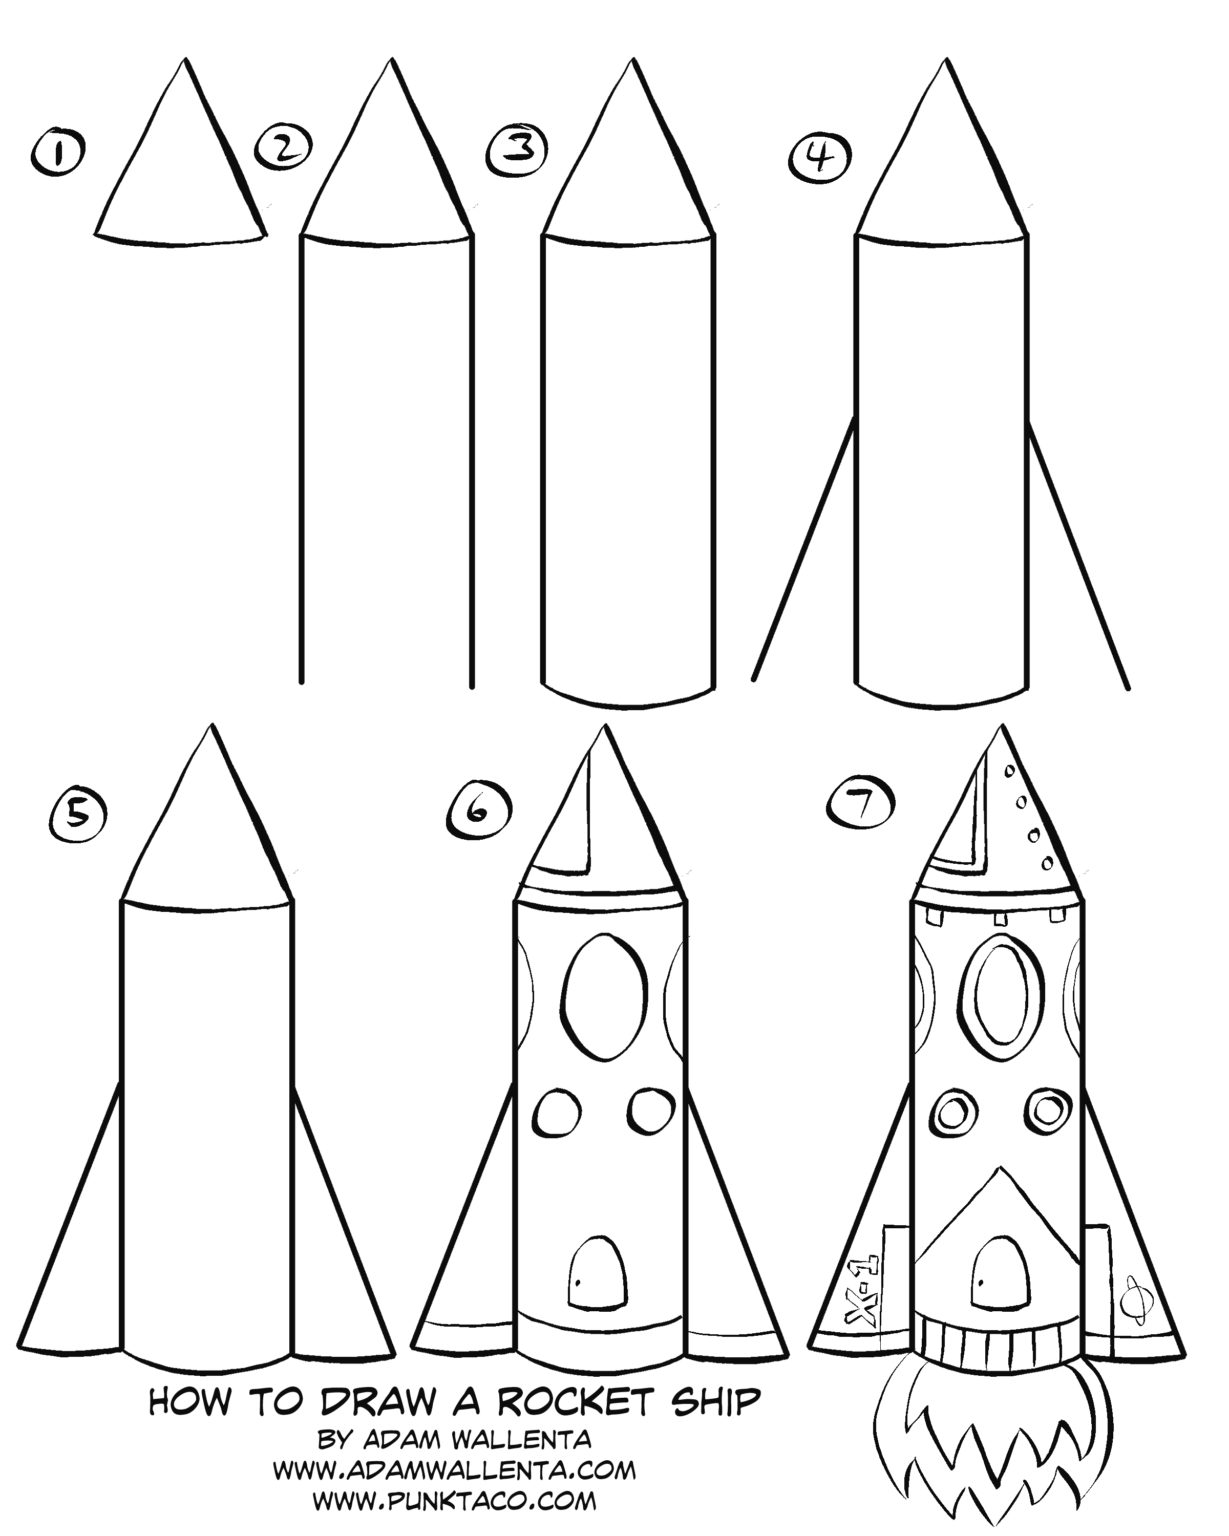 how-to-draw-a-rocket-ship-adam-wallenta